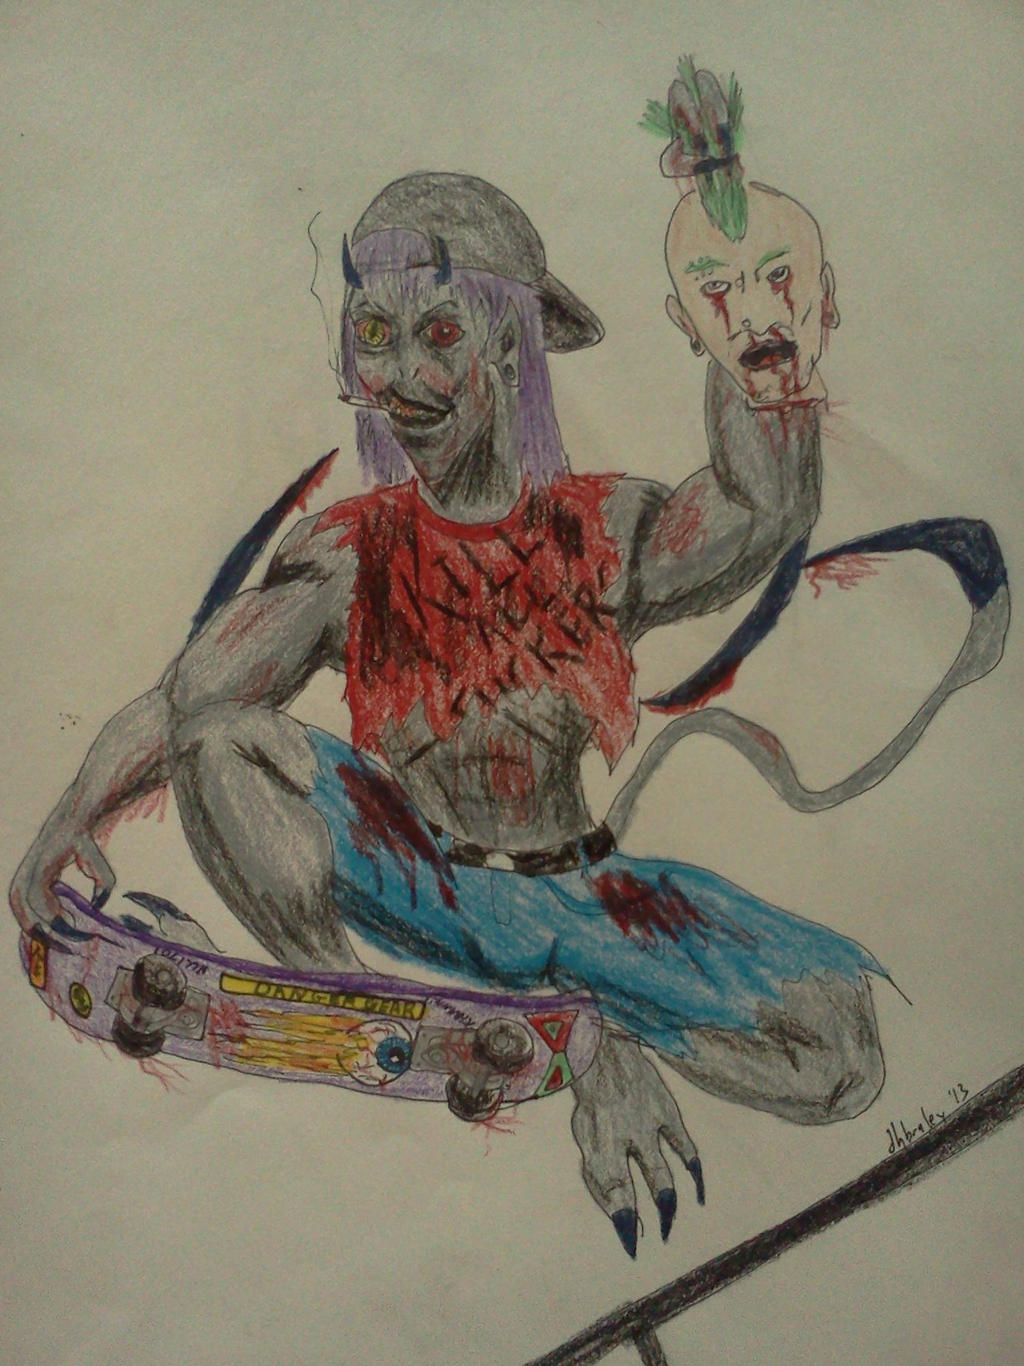 Skater Ghoul-an art trade